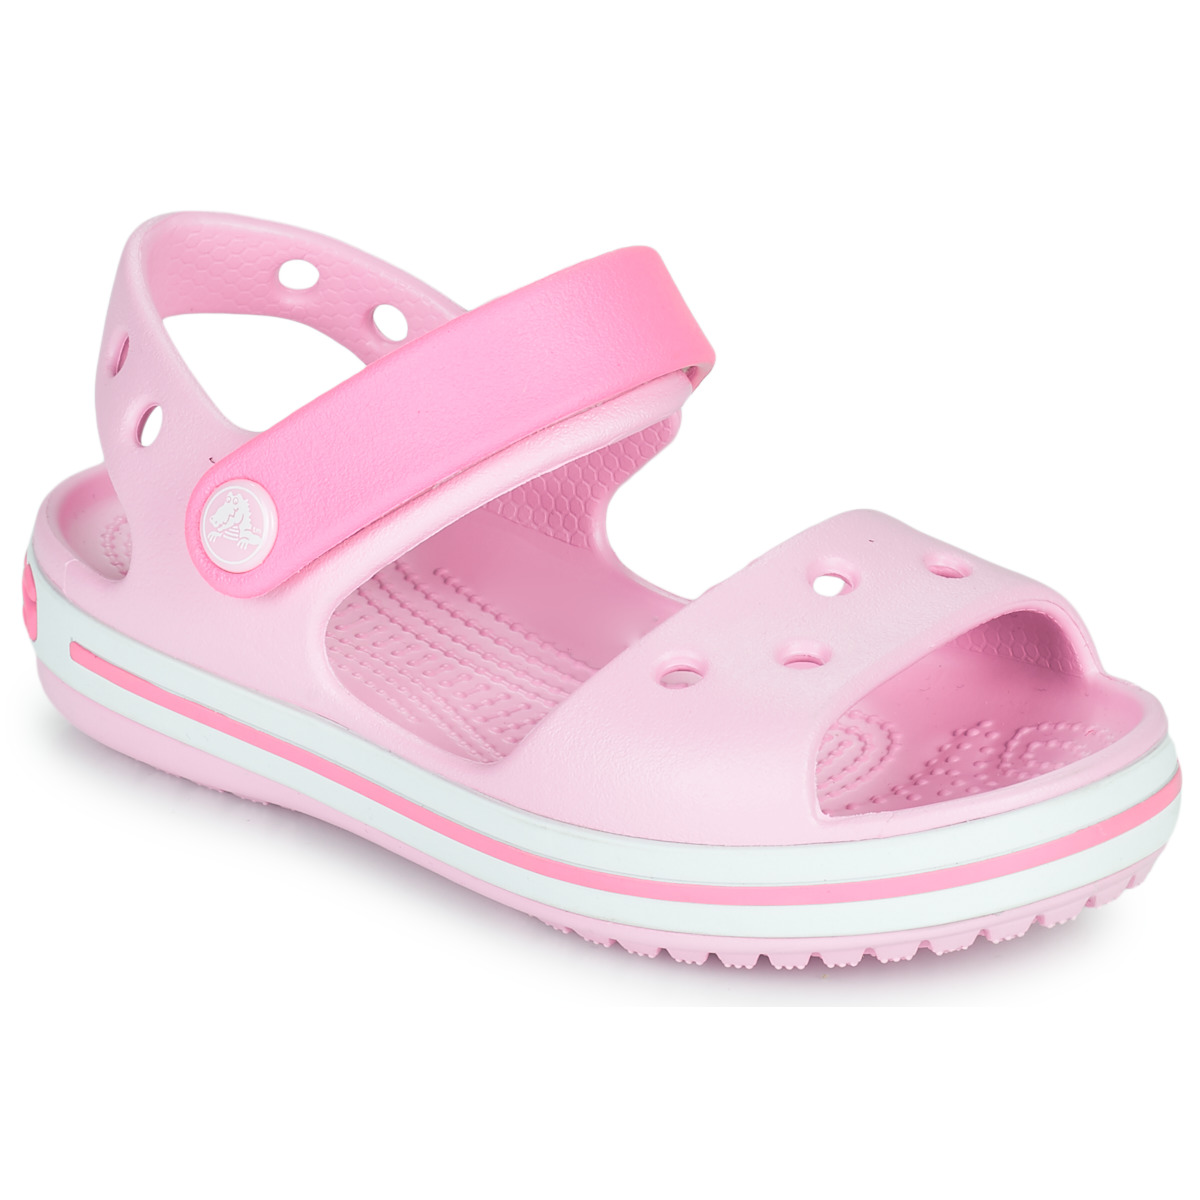 Crocs Sandals for Kids